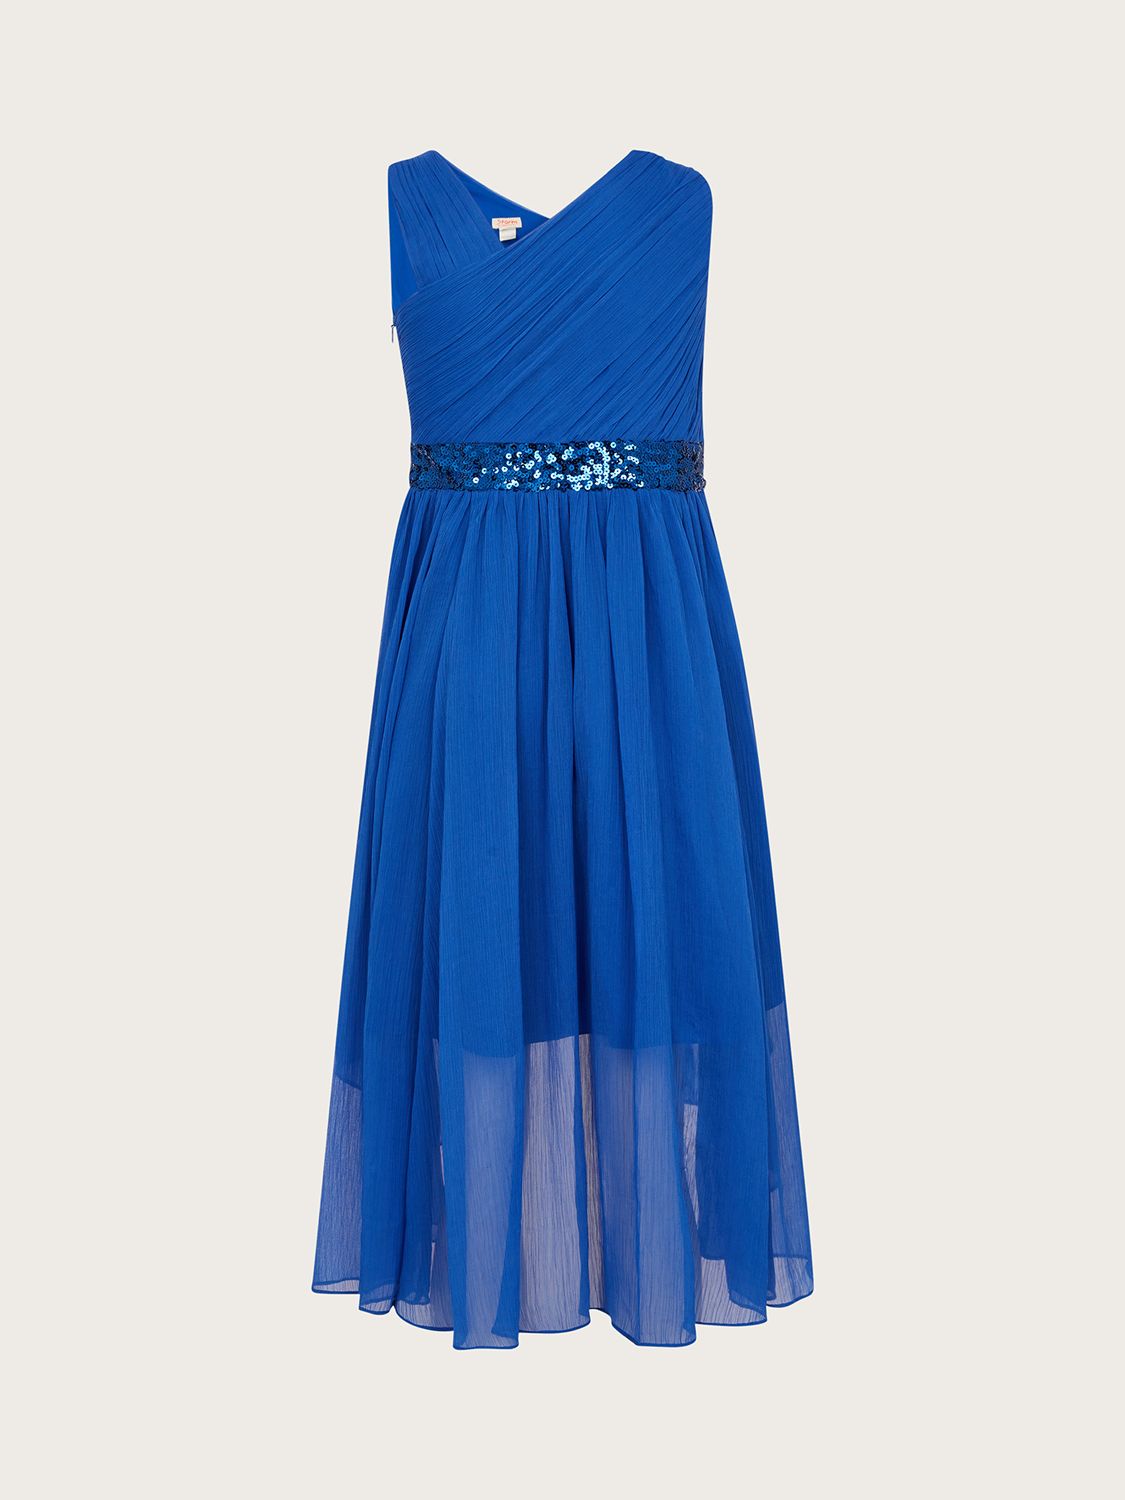 Monsoon Kids' Abigail Asymmetric Party Dress, Blue, 8 years